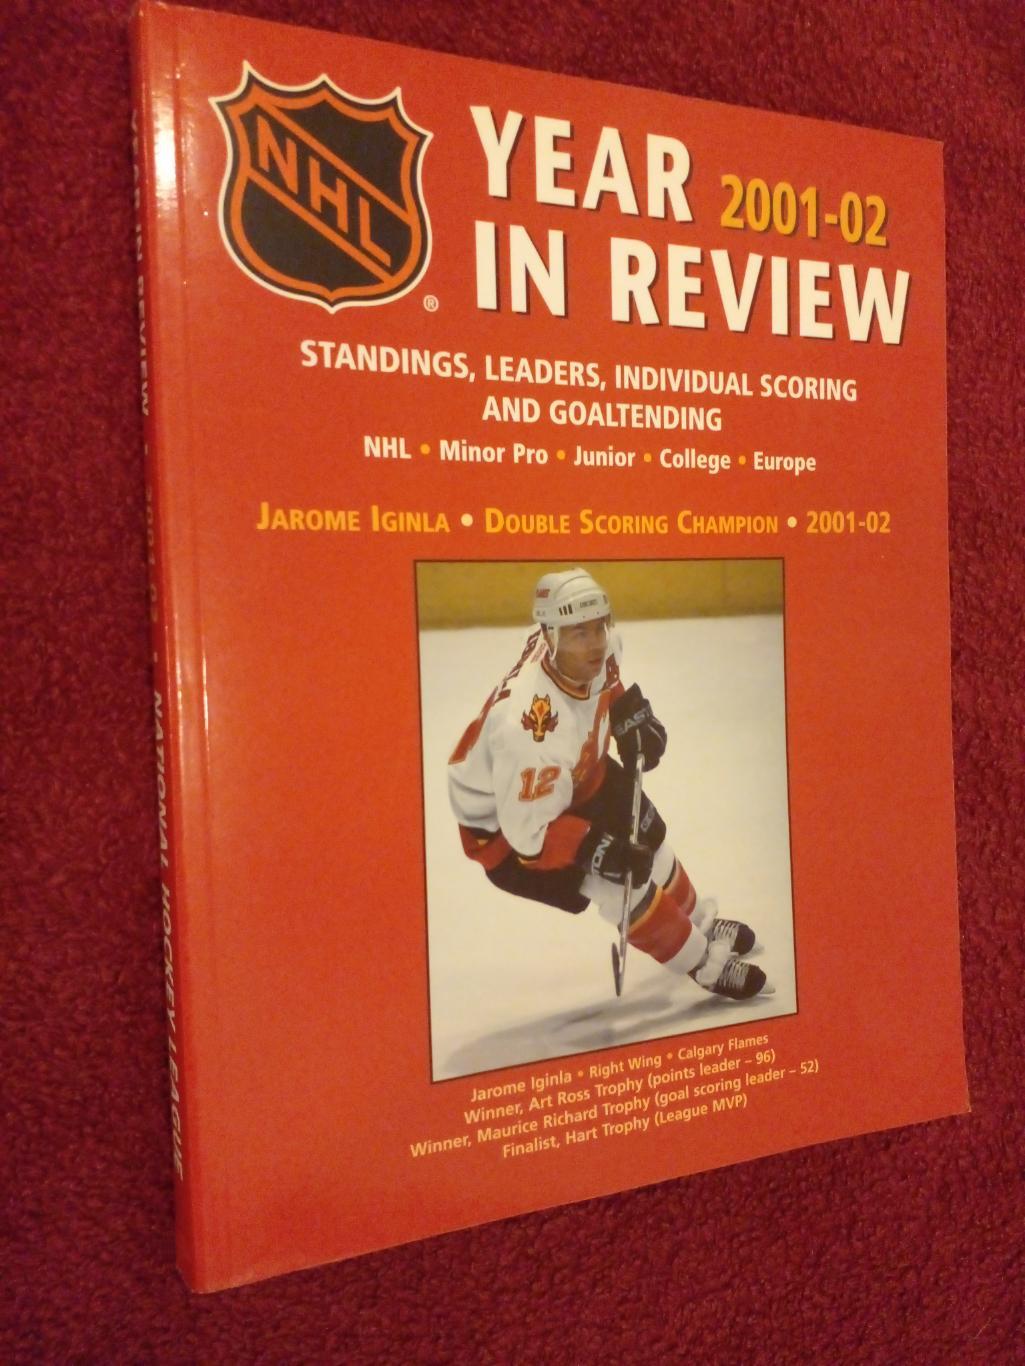 Хоккей. Справочник YEAR 2001-2002 IN REVIEW. НХЛ, Юниоры, ЕВРОПА итд.